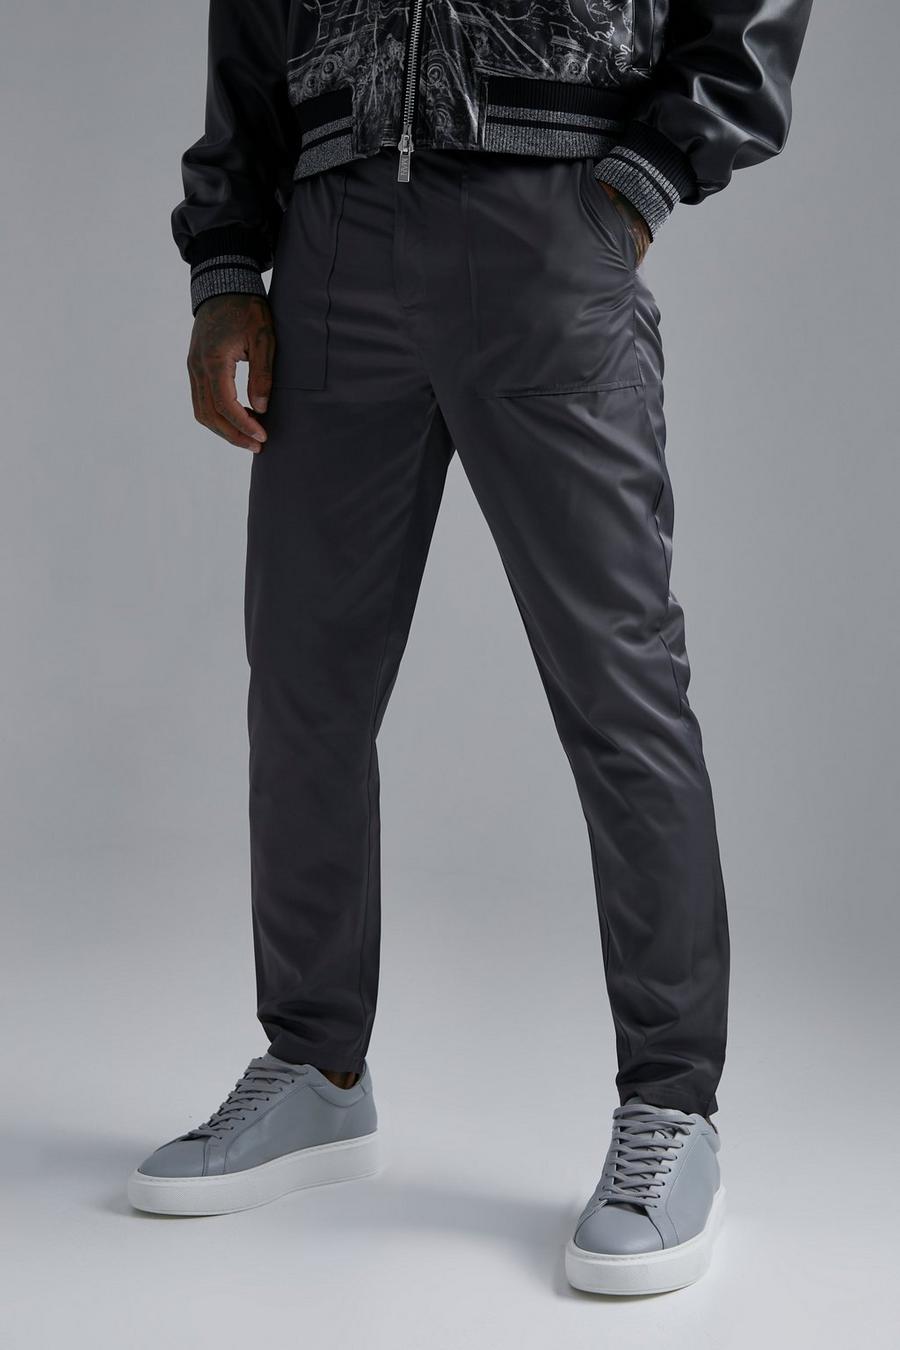 Pantalón pesquero elegante ajustado, Dark grey gris